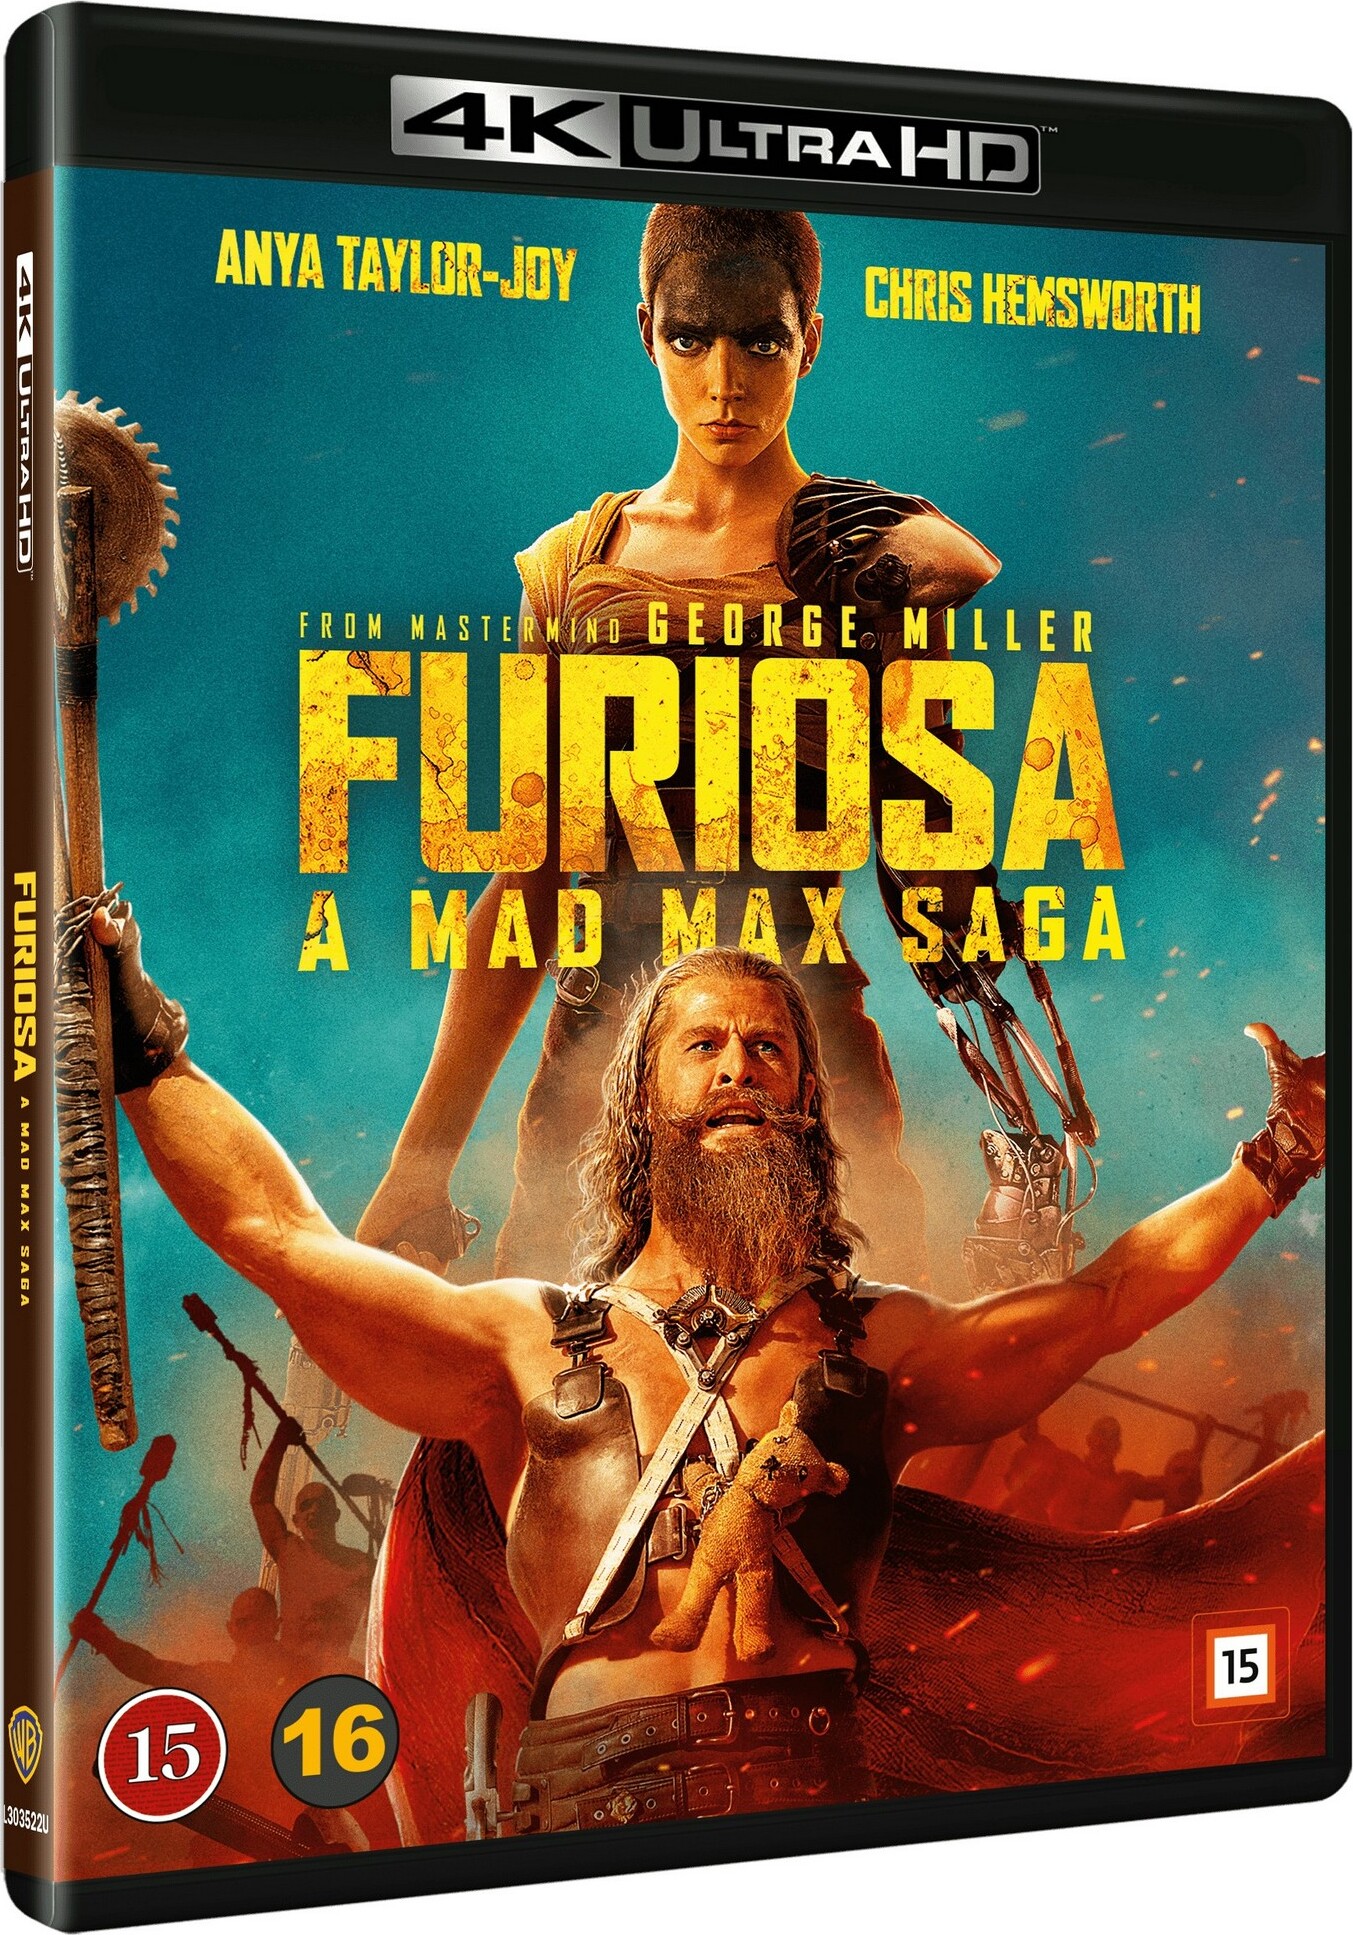 Mad Max 4K Blu-ray (Cine-Edition / Interceptor) (Italy)